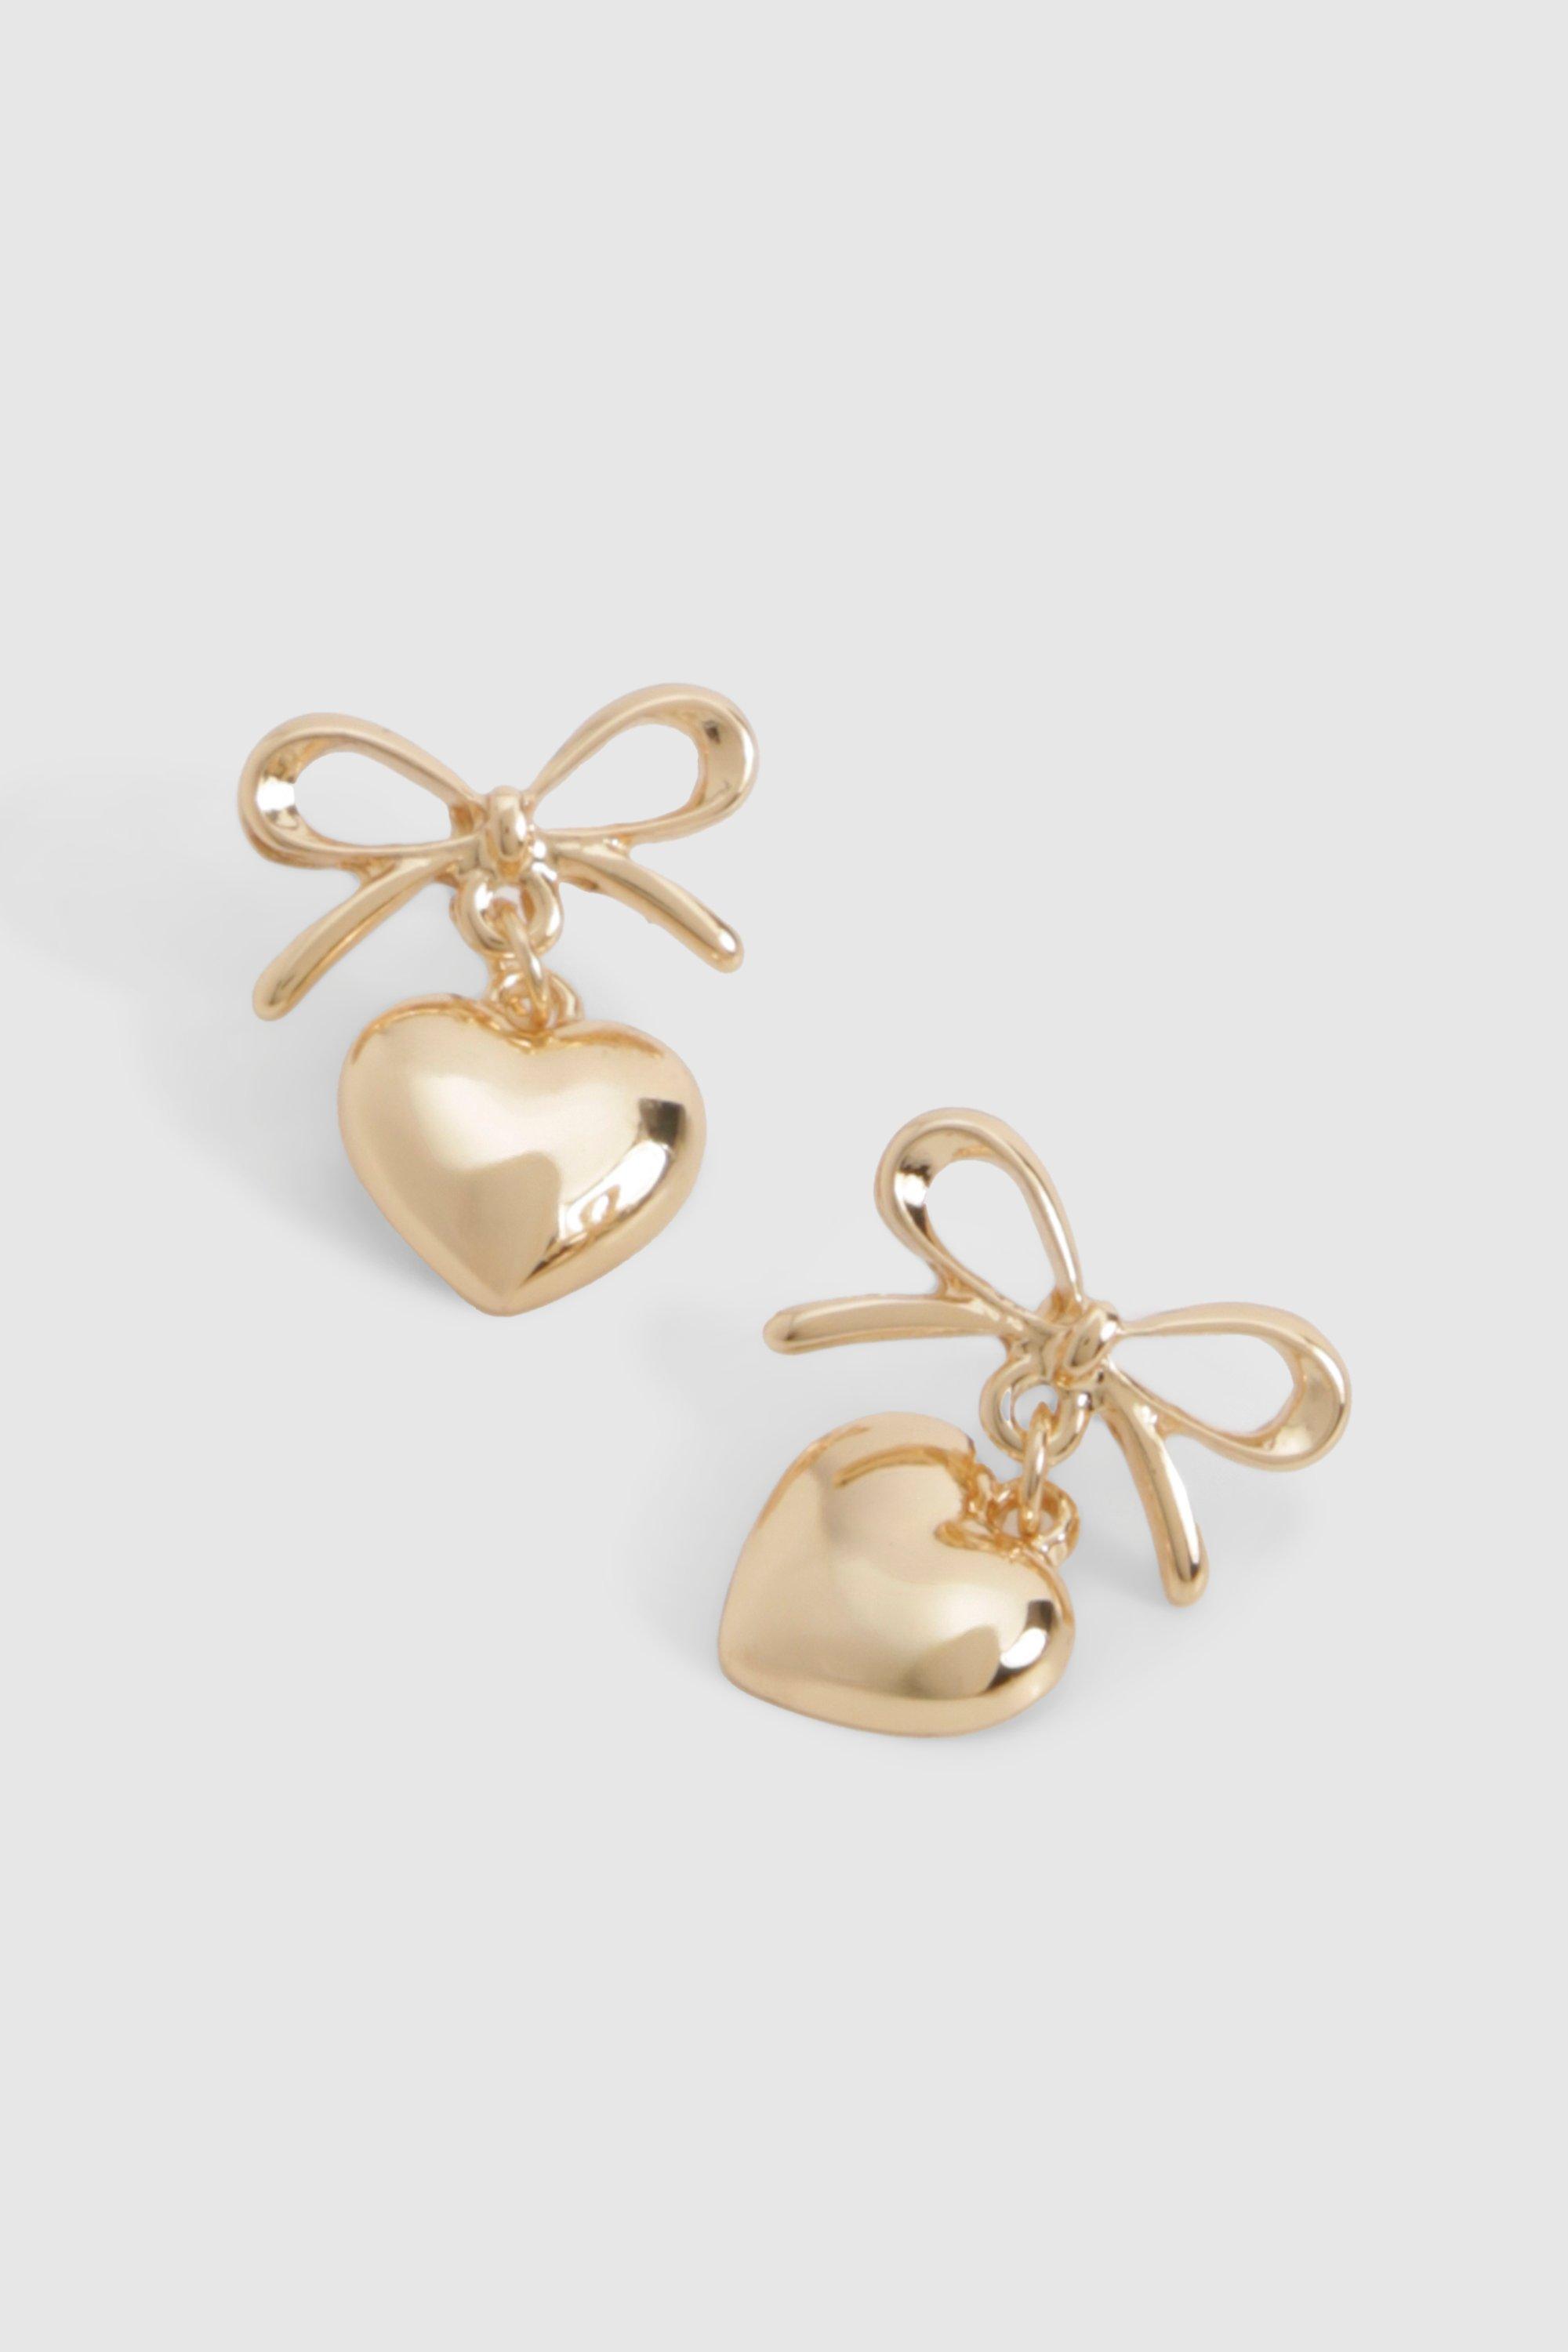 Image of Gold Bow & Heart Drop Earrings, Metallics